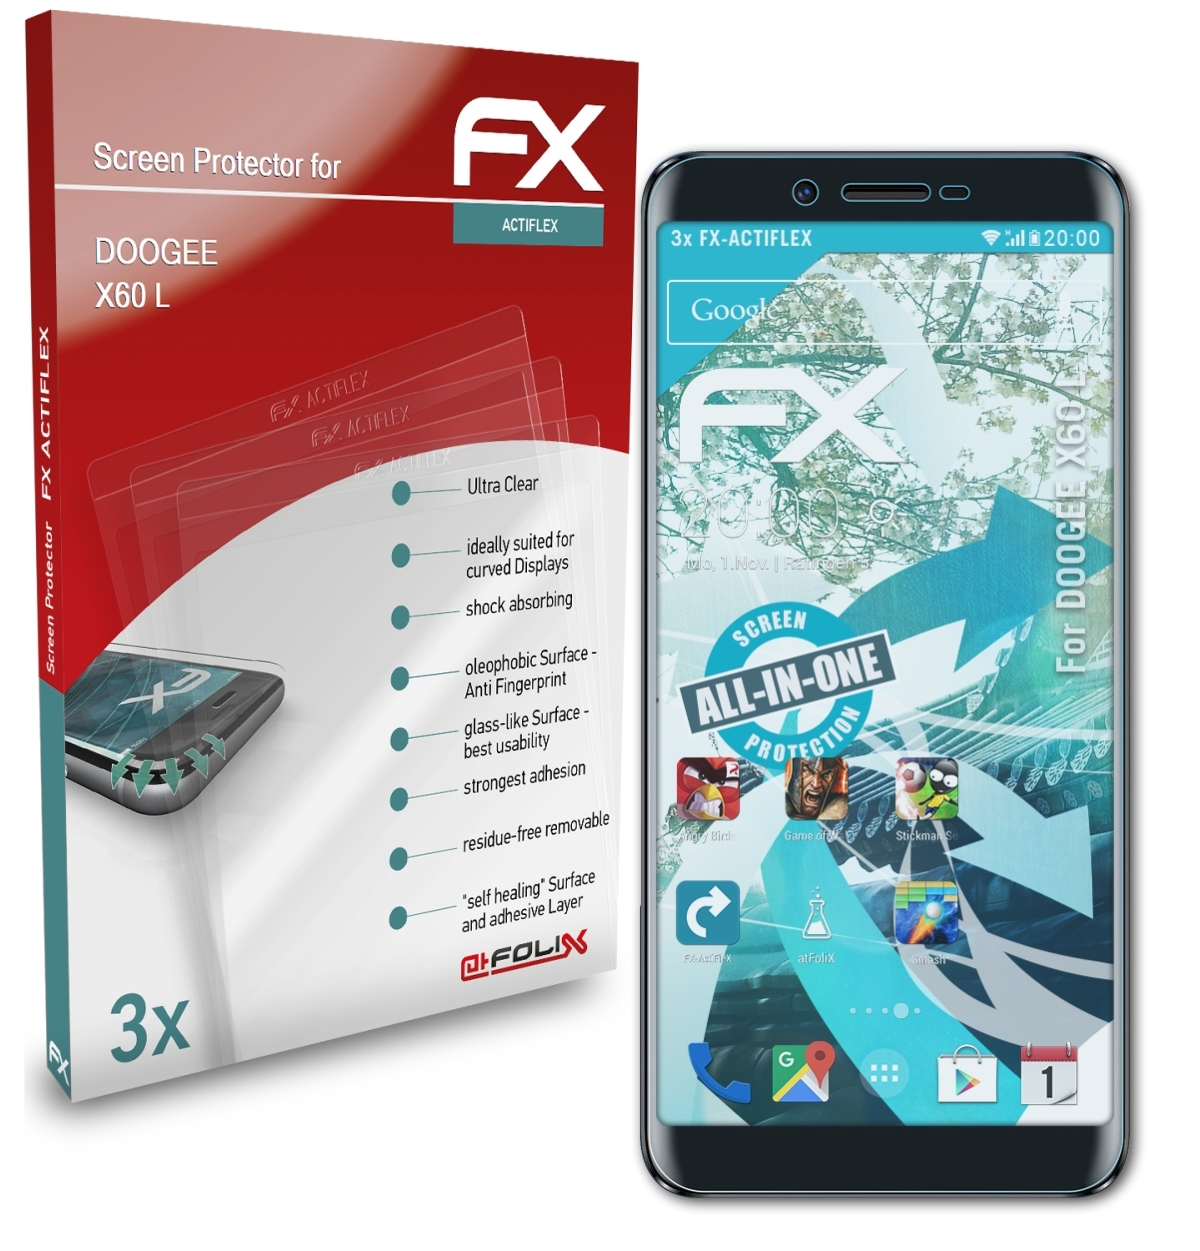 ATFOLIX 3x Displayschutz(für X60 Doogee FX-ActiFleX L)